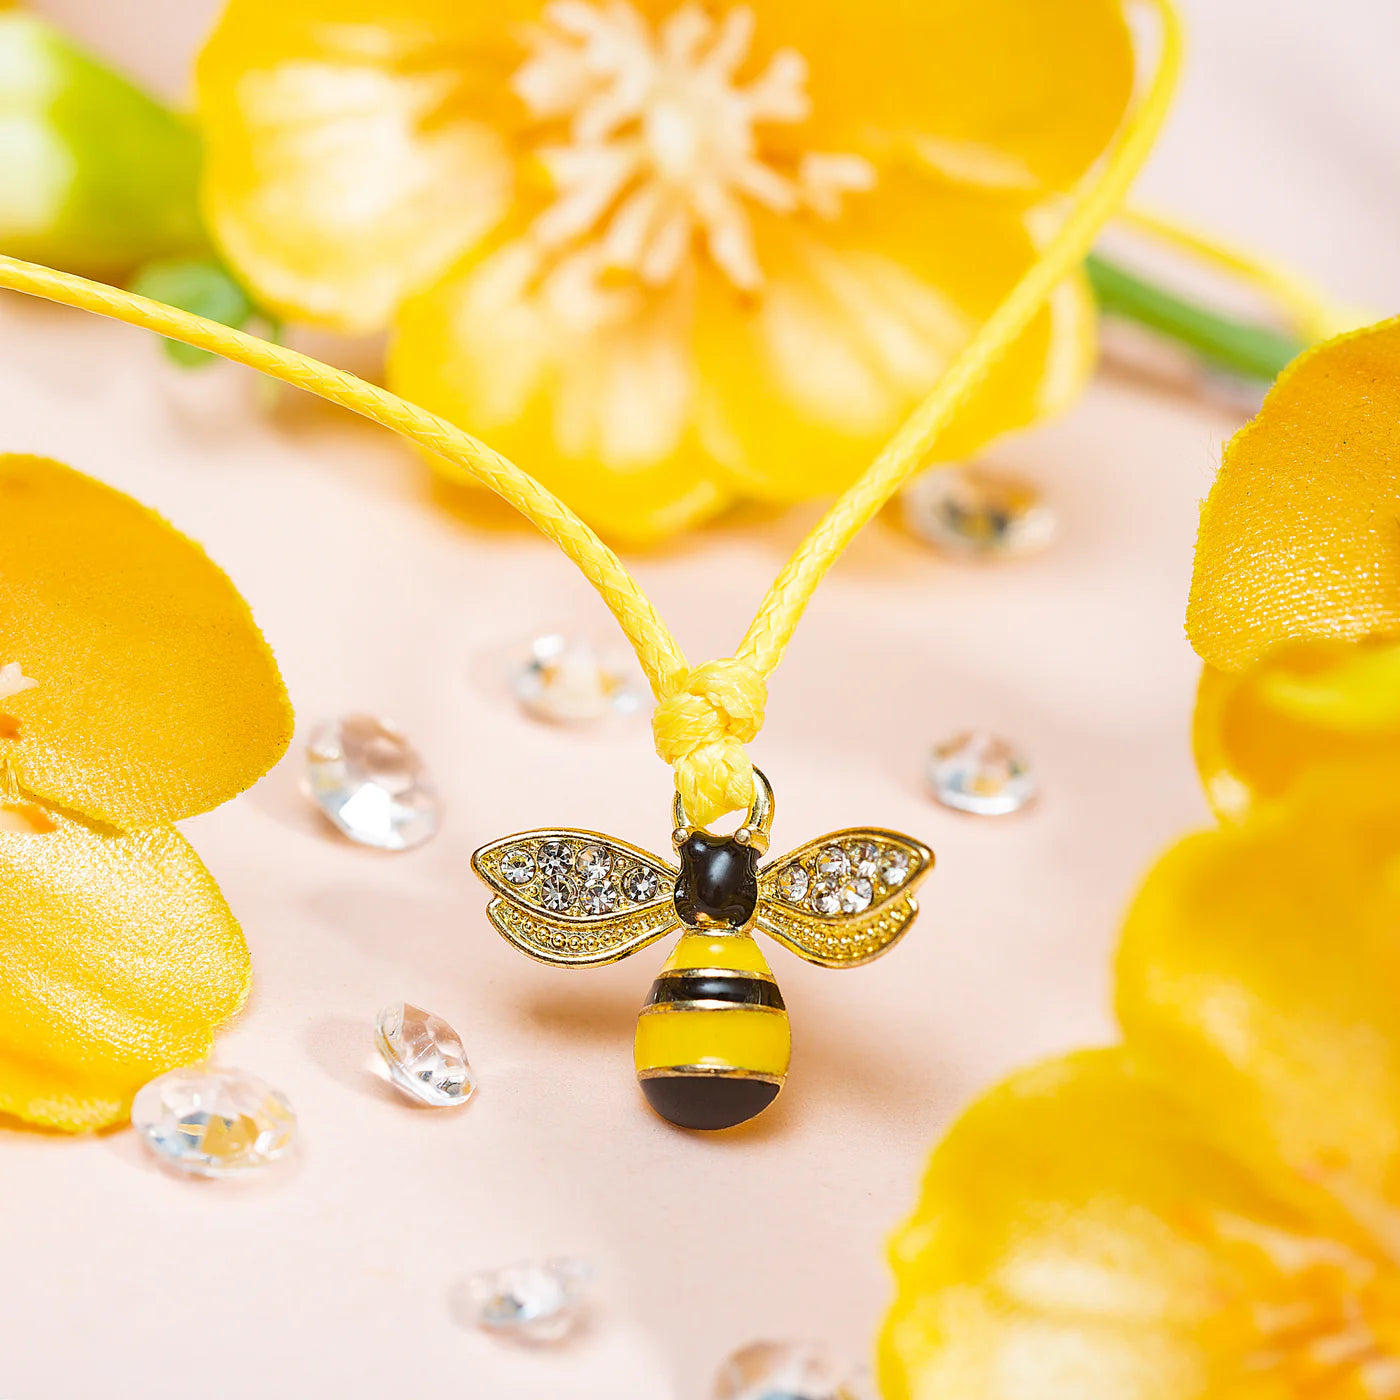 "The Little Bee" Keepsake Bracelet and Card Set